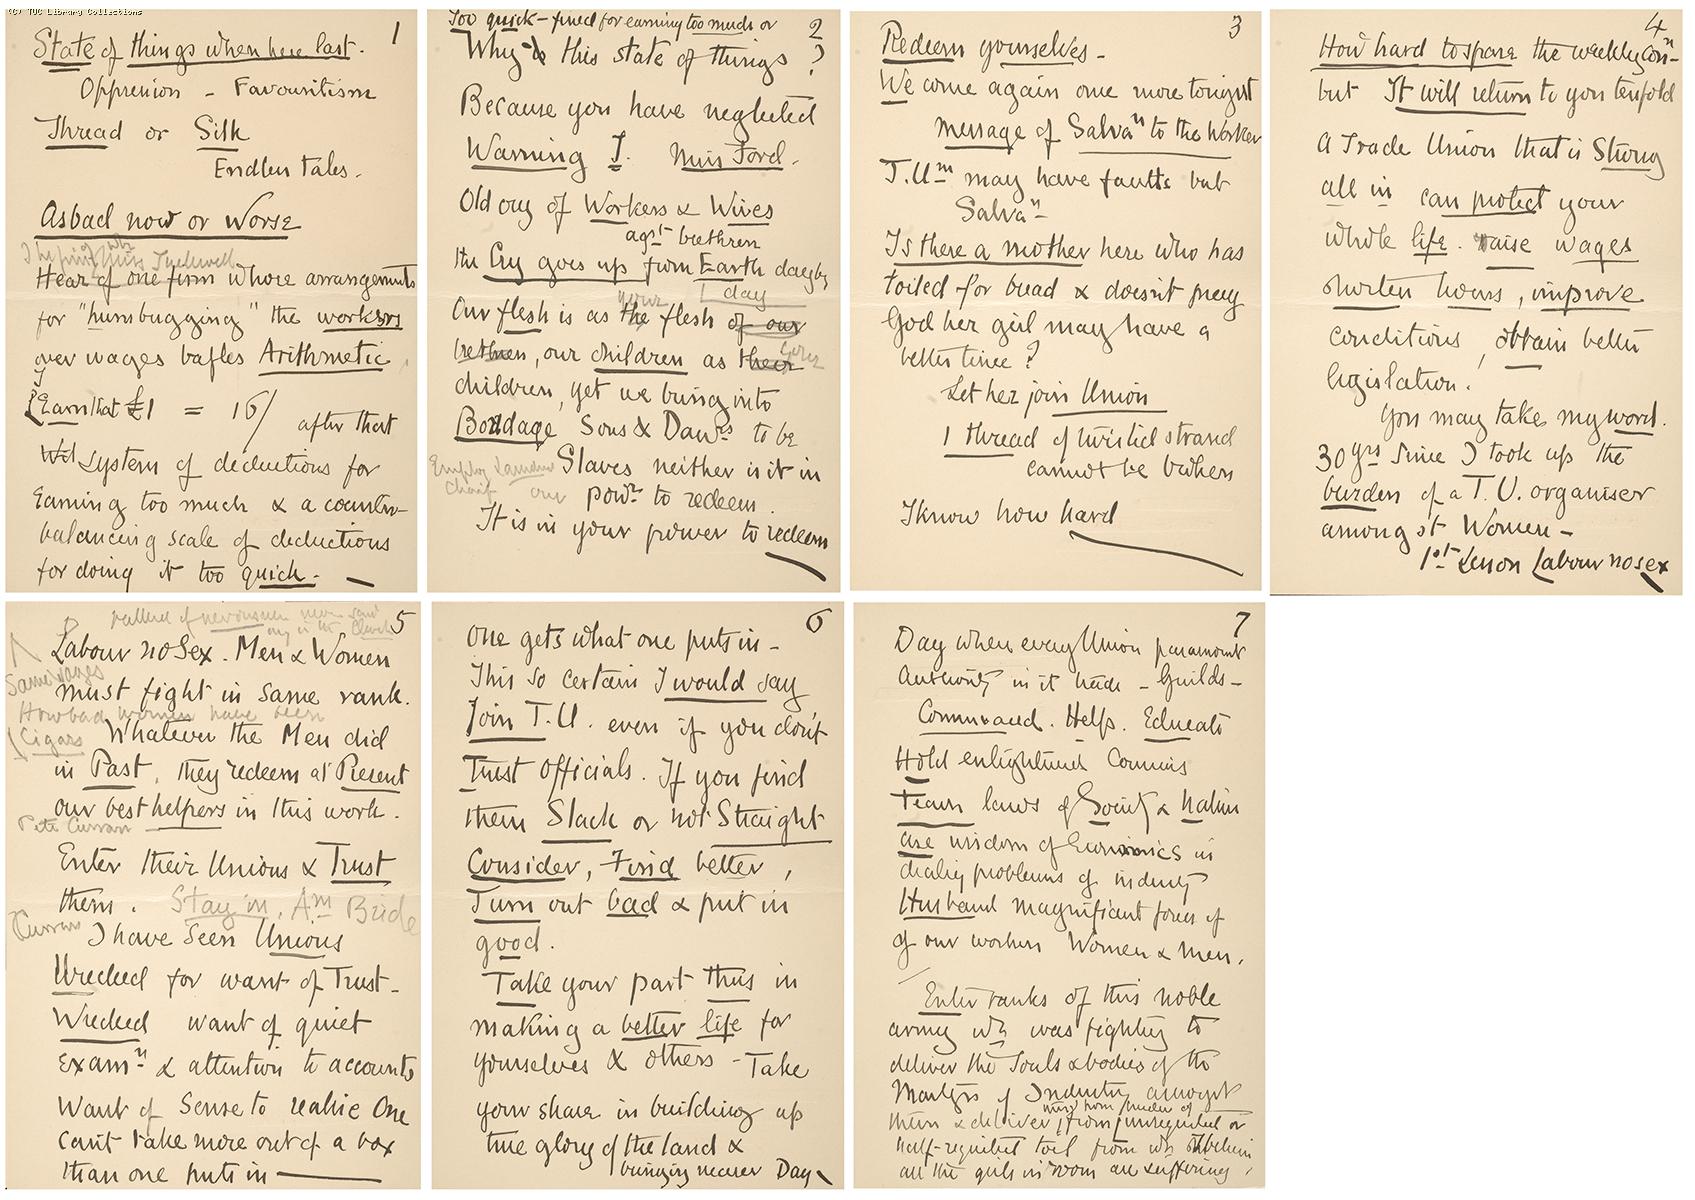 Lady Dilke's speech notes, 1904